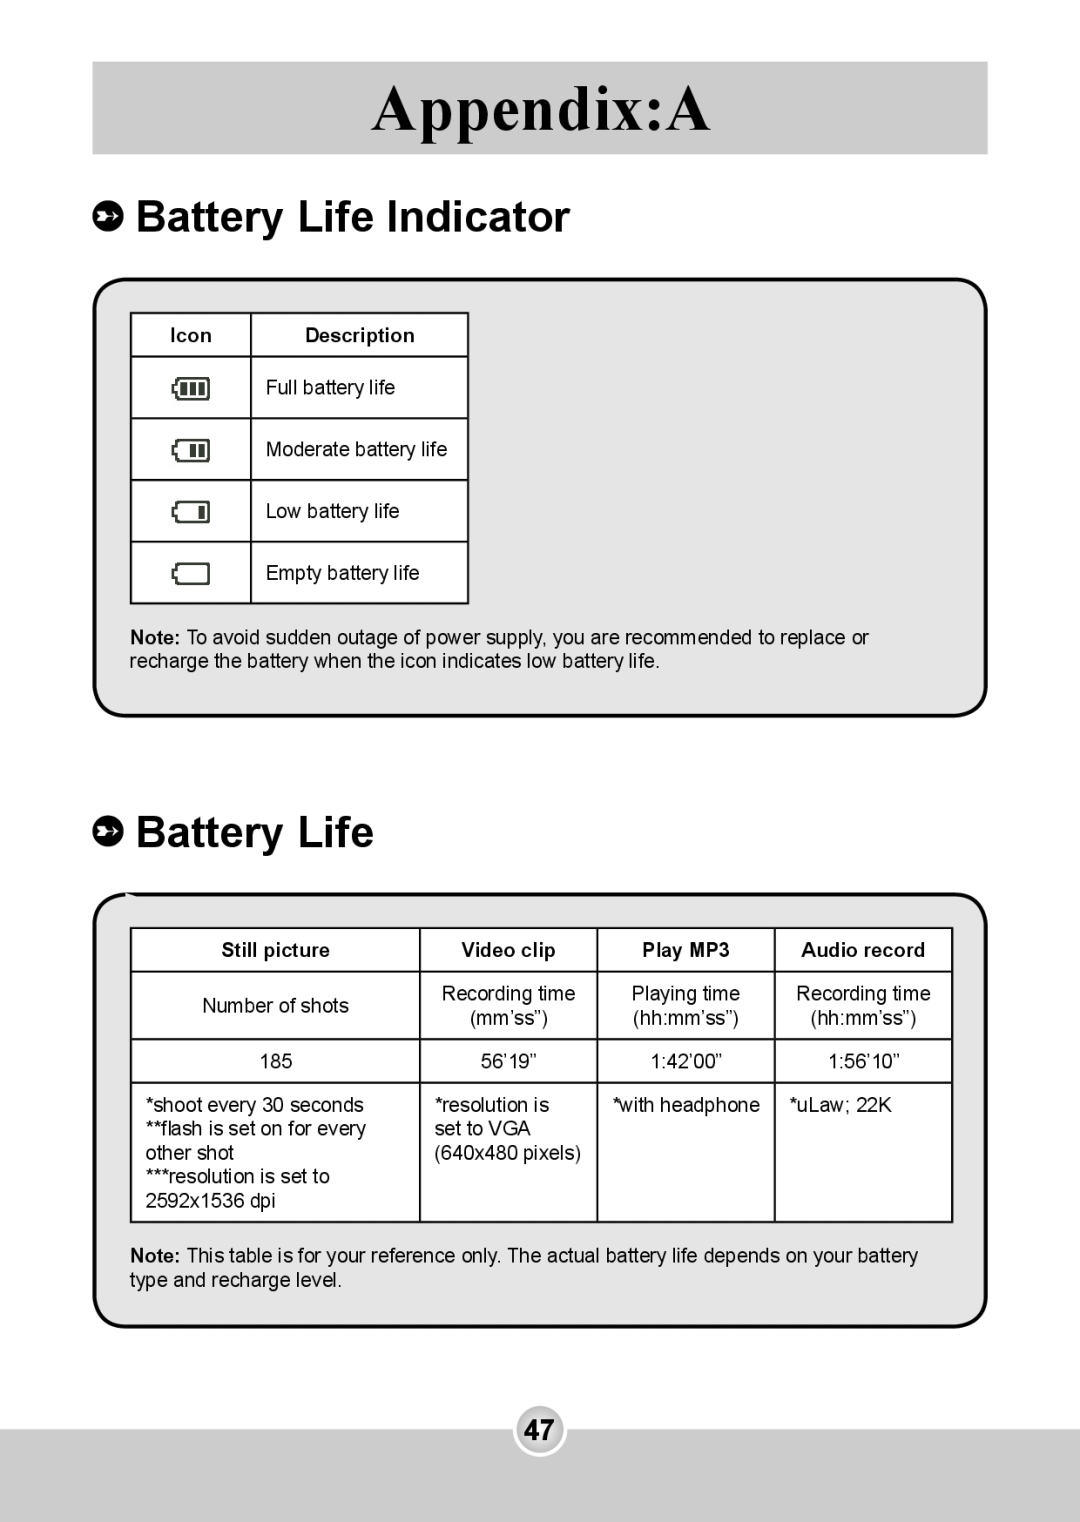 Nokia 6108 manual Battery Life Indicator, AppendixA 